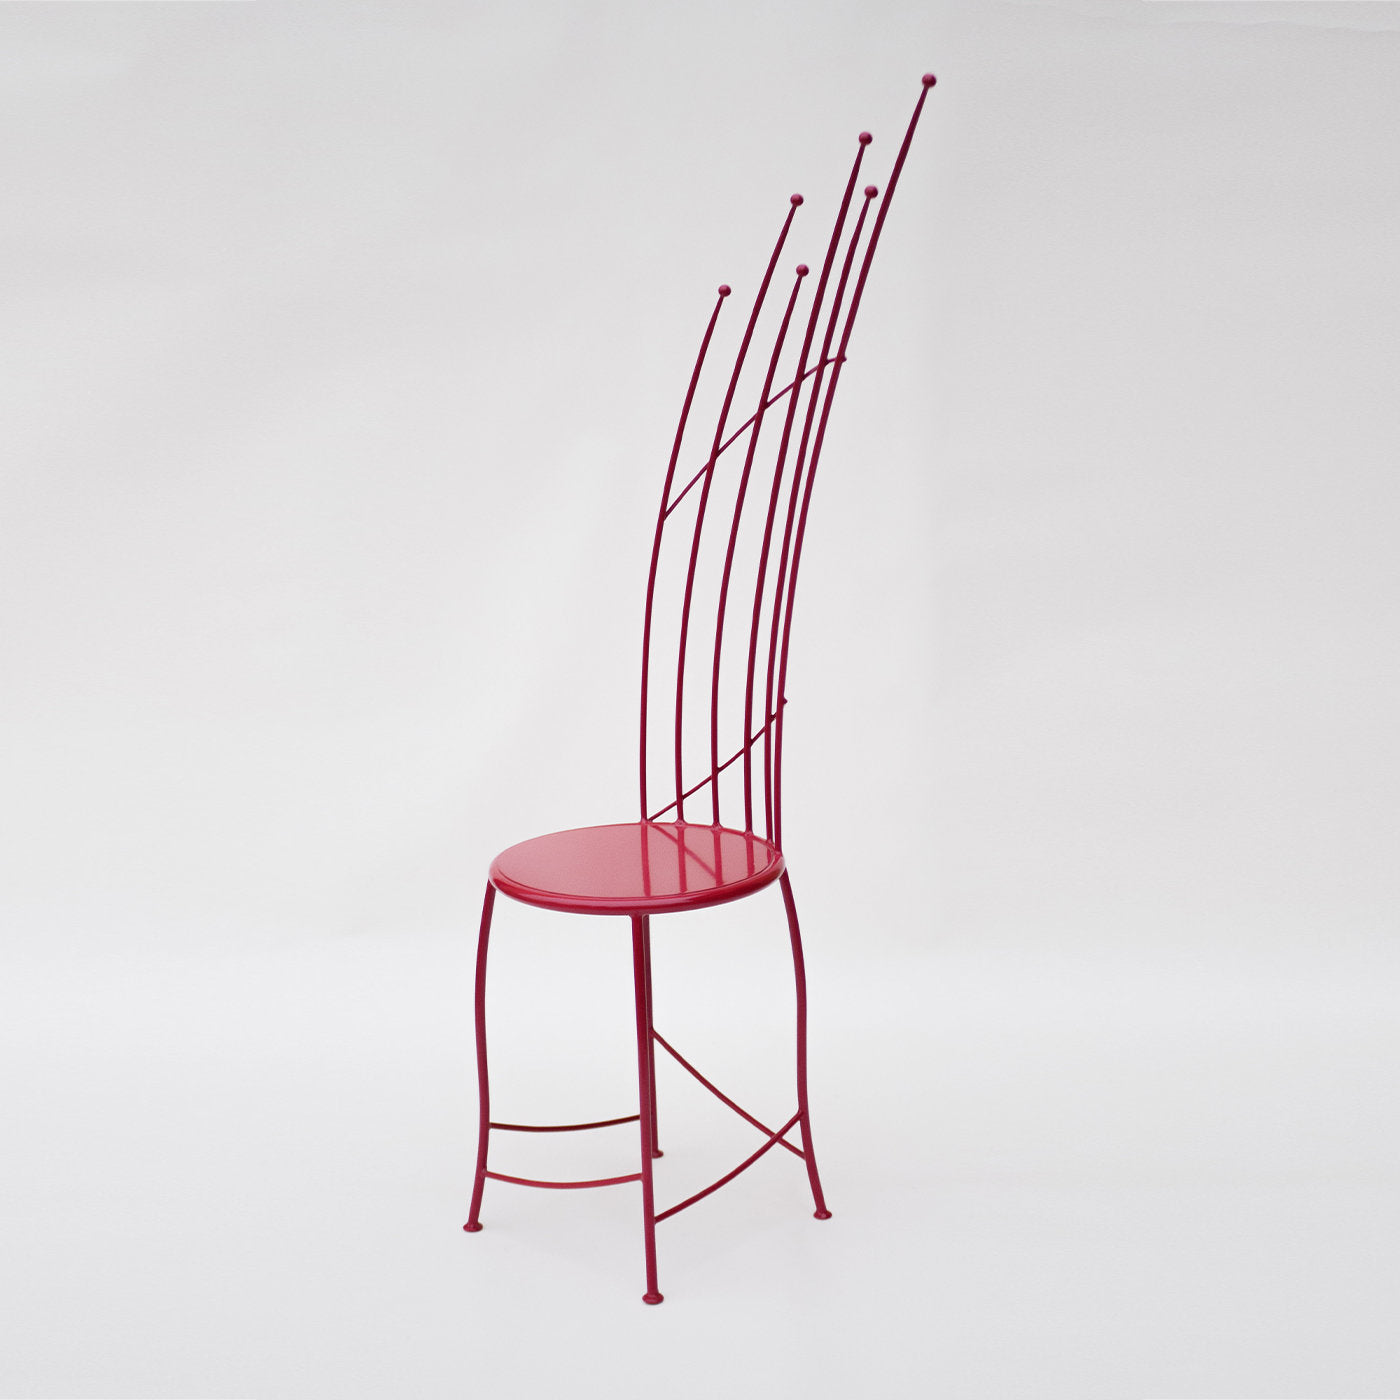 Il Vento Sculpture Chair - Alternative view 1